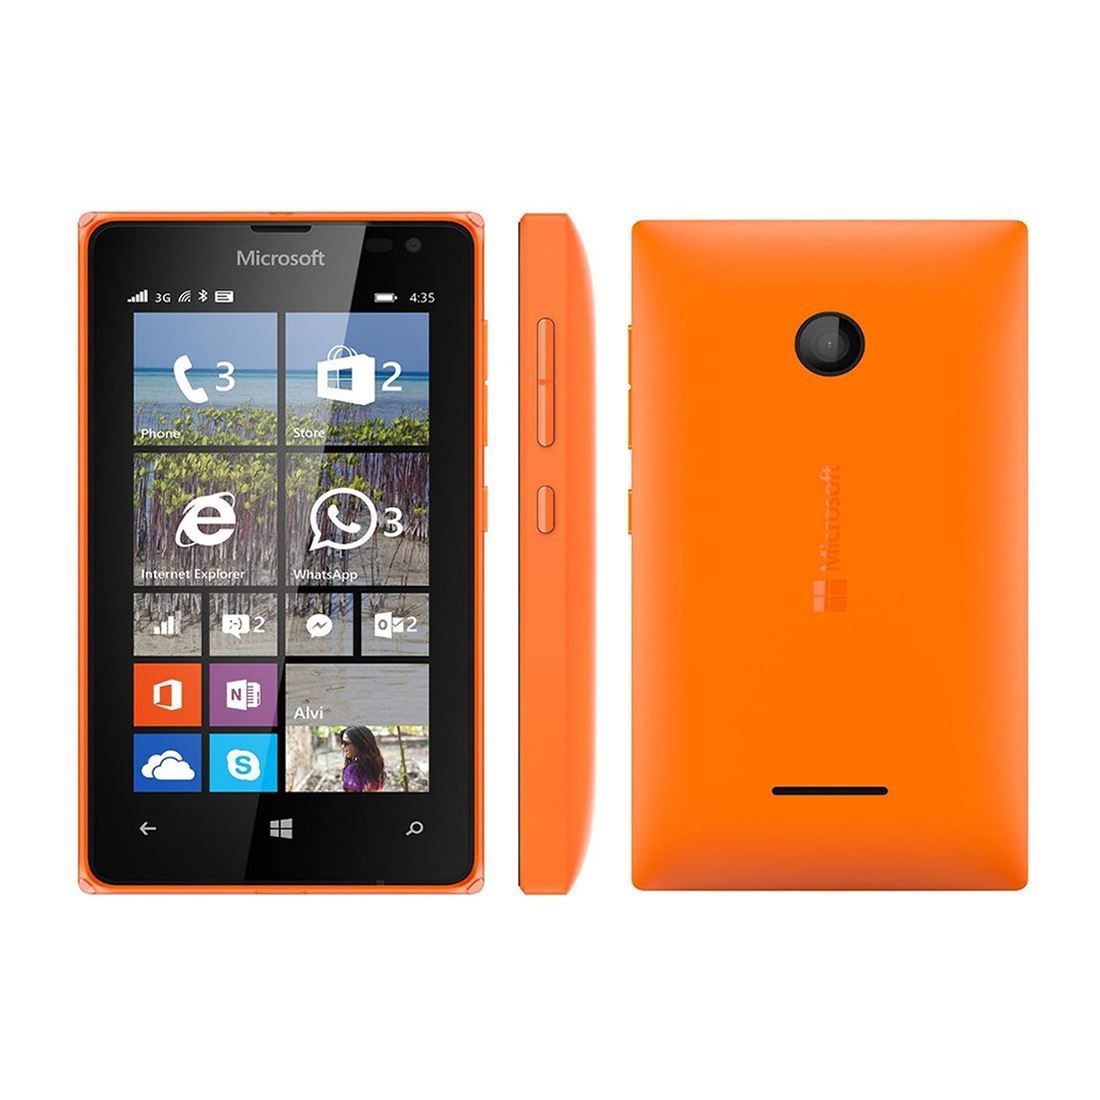 Microsoft Lumia 435 Refurbished 2G Feature Phone Single Sim - Orange